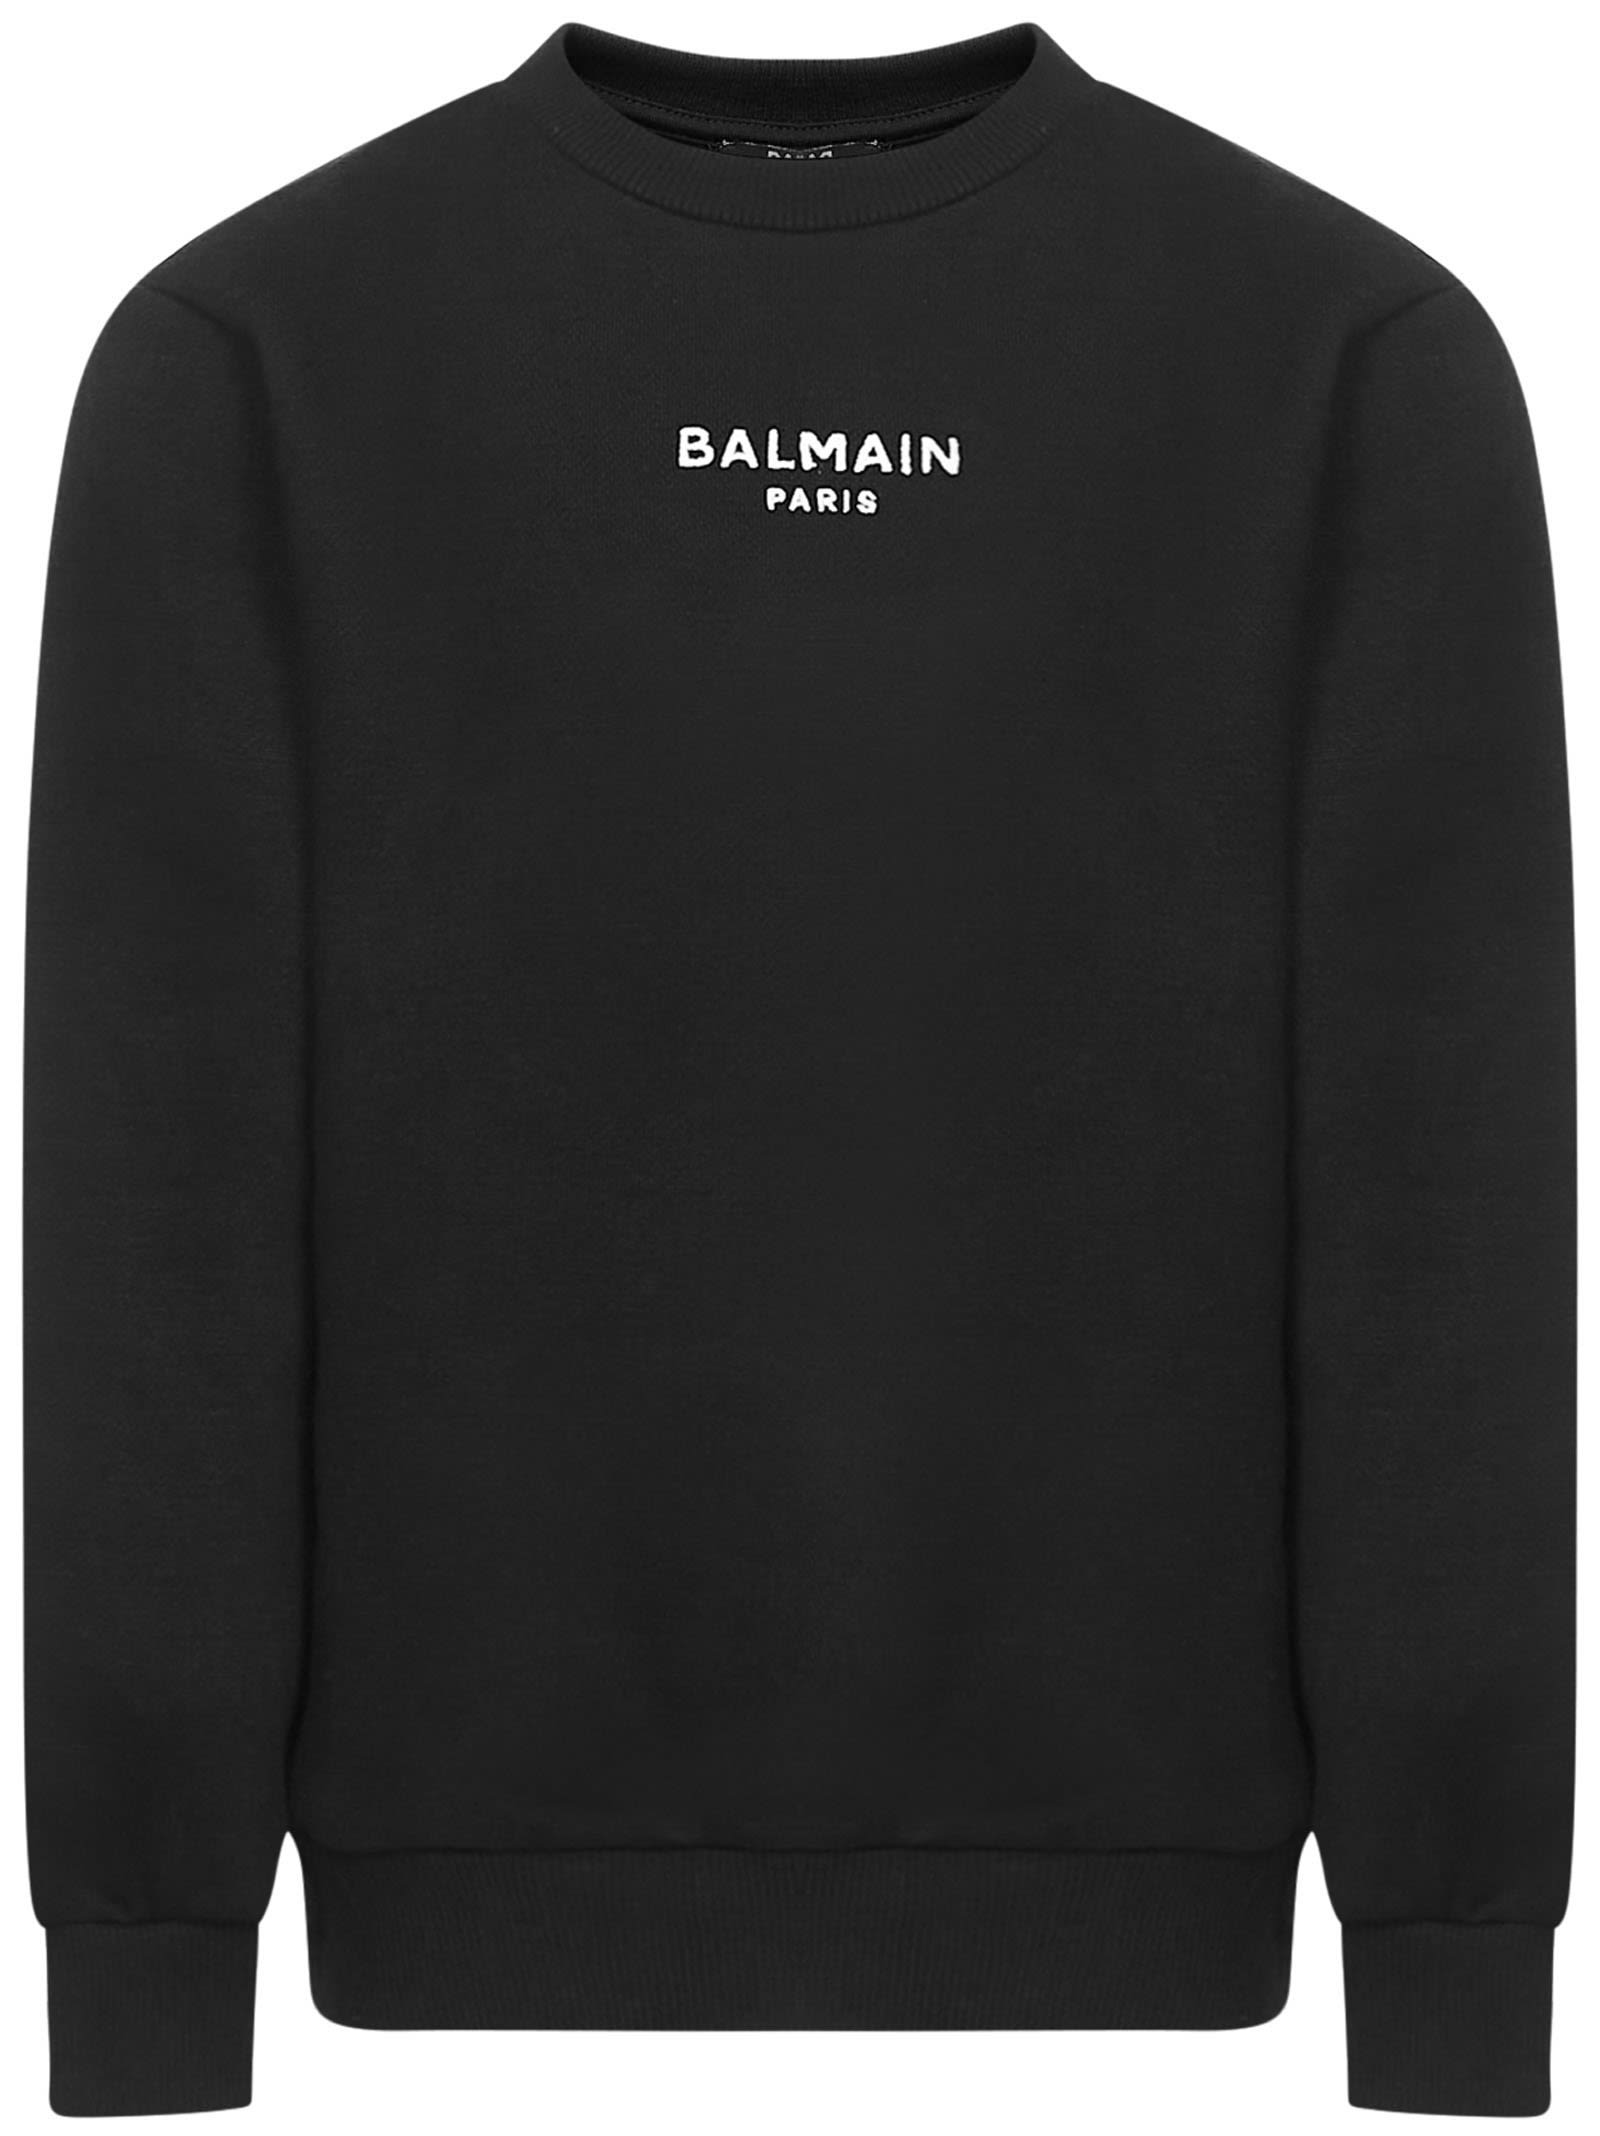 Balmain Paris Kids Sweatshirt In Black